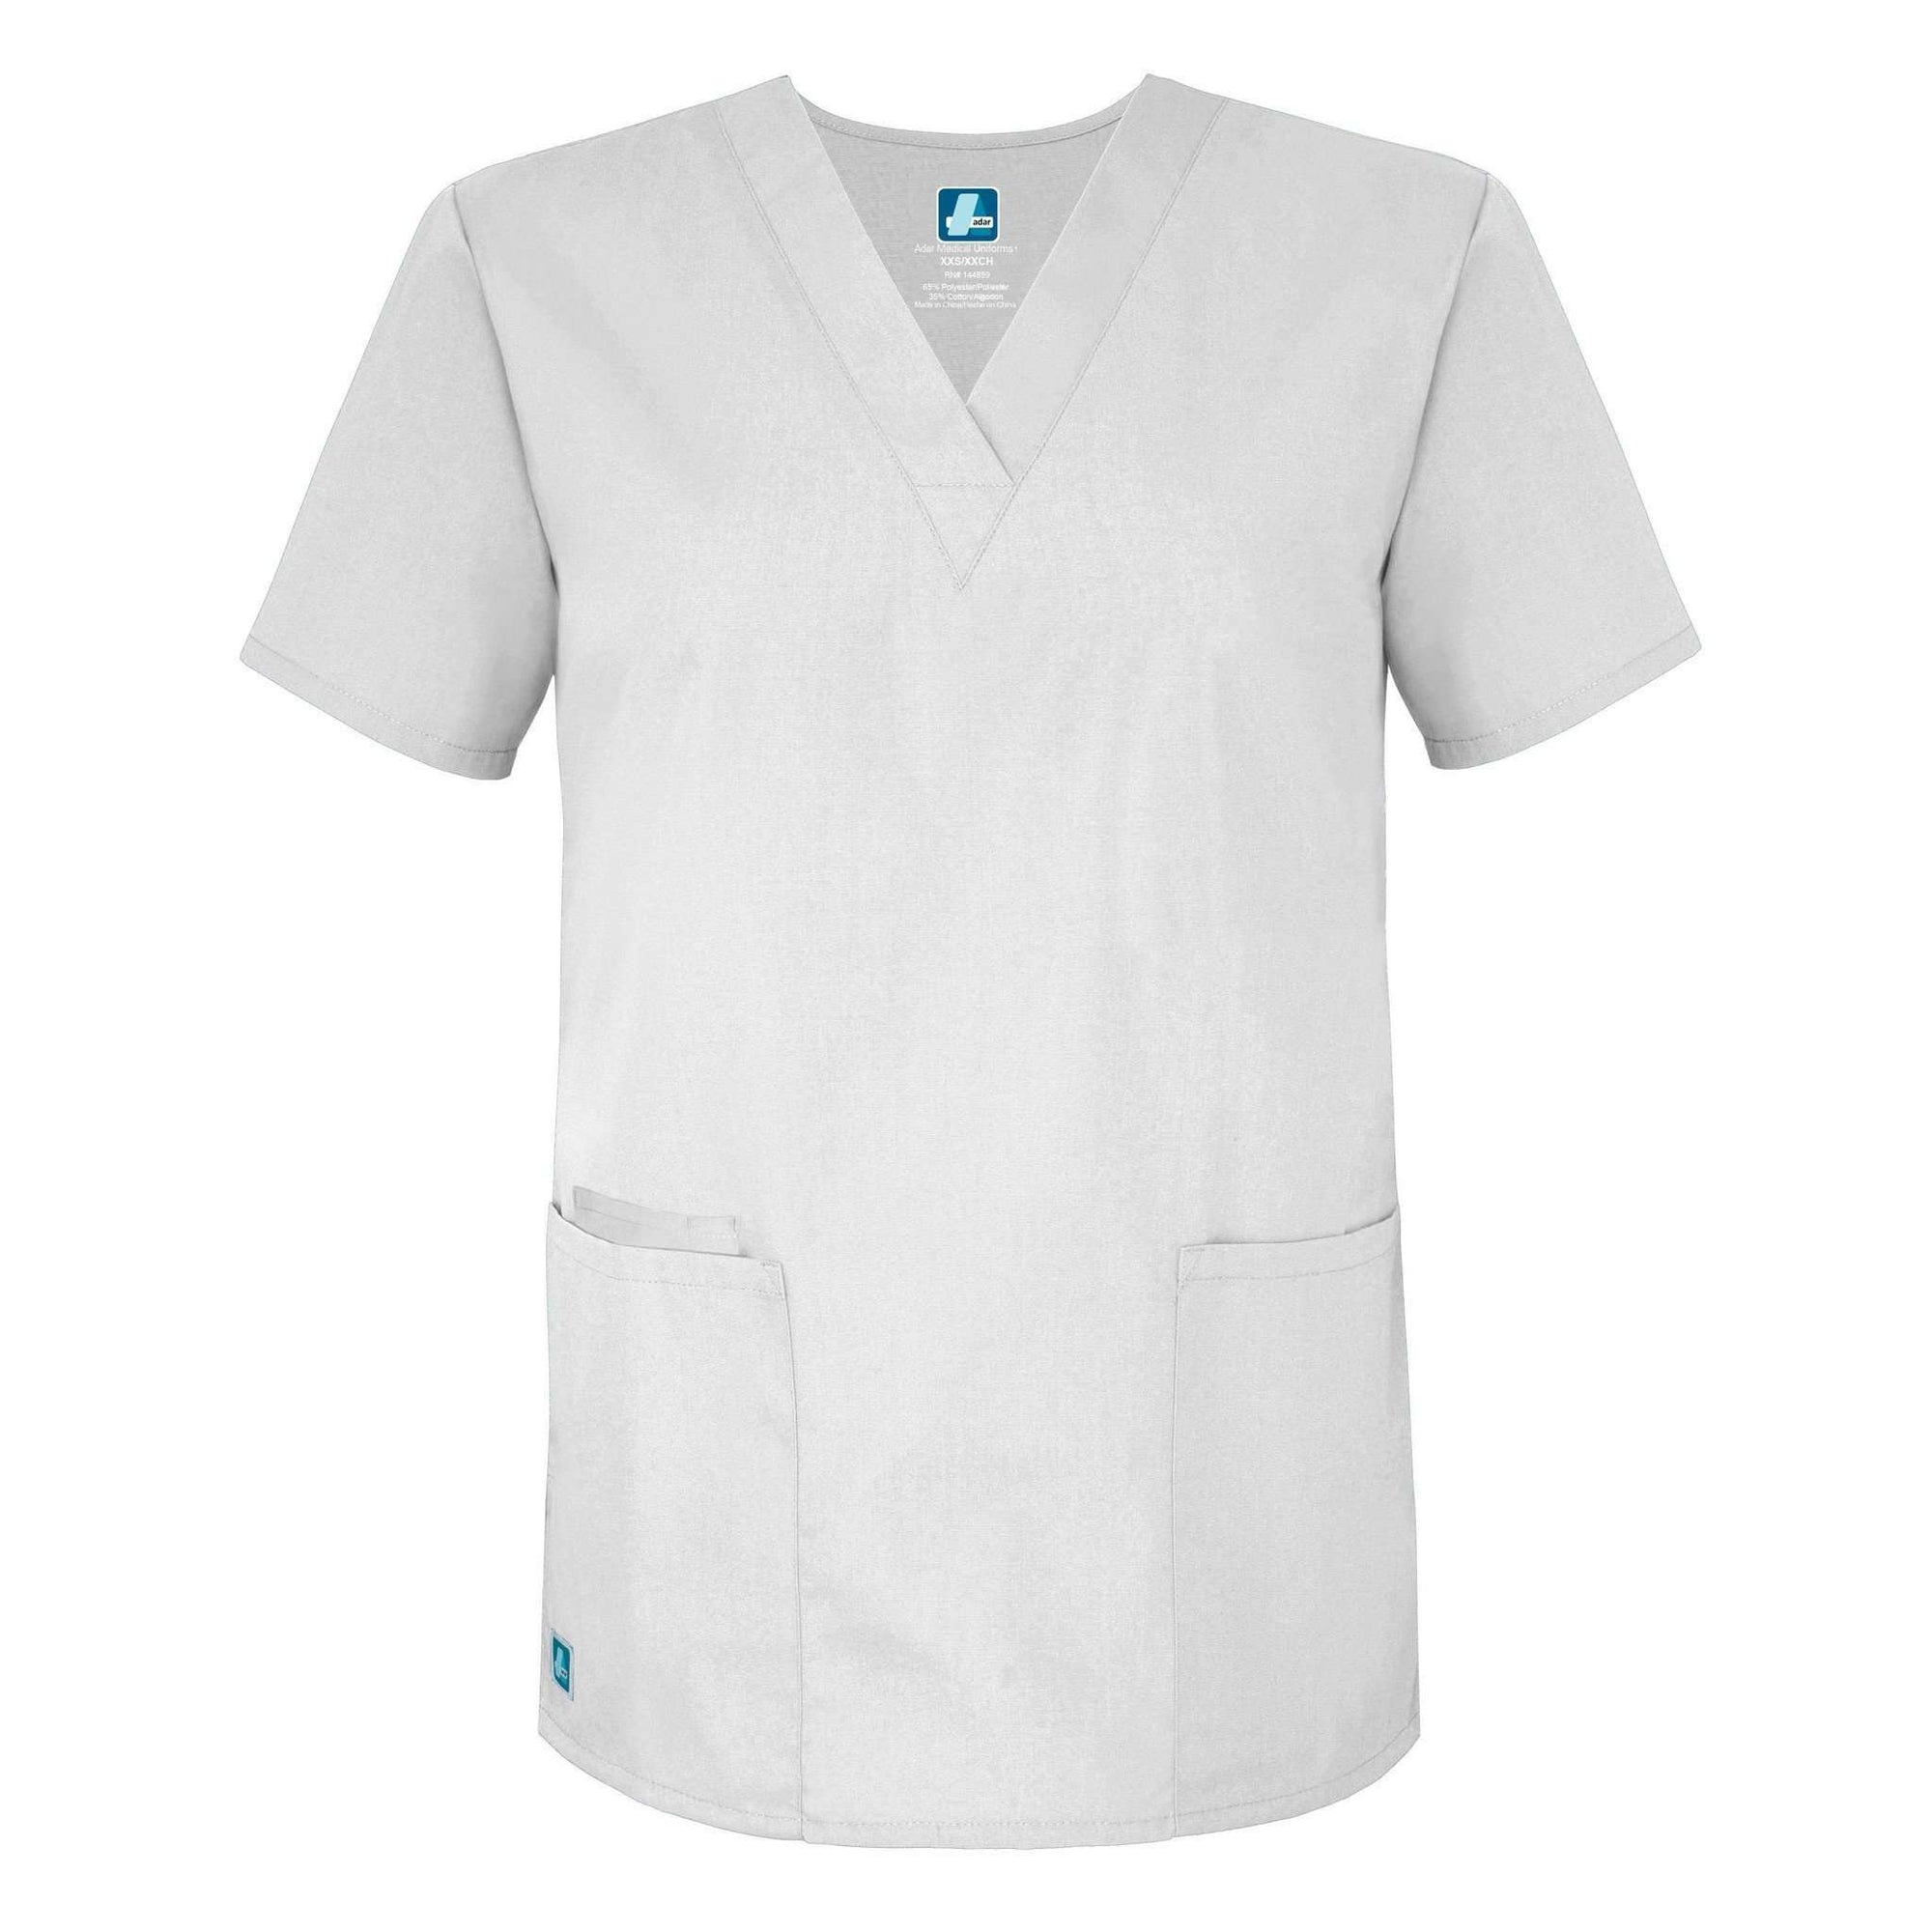  Adar - uniforms Medical Uniform Tops uniforms online Adar Universal Unisex V-Neck 2 Pocket Scrub Top White - SchoolUniforms.com